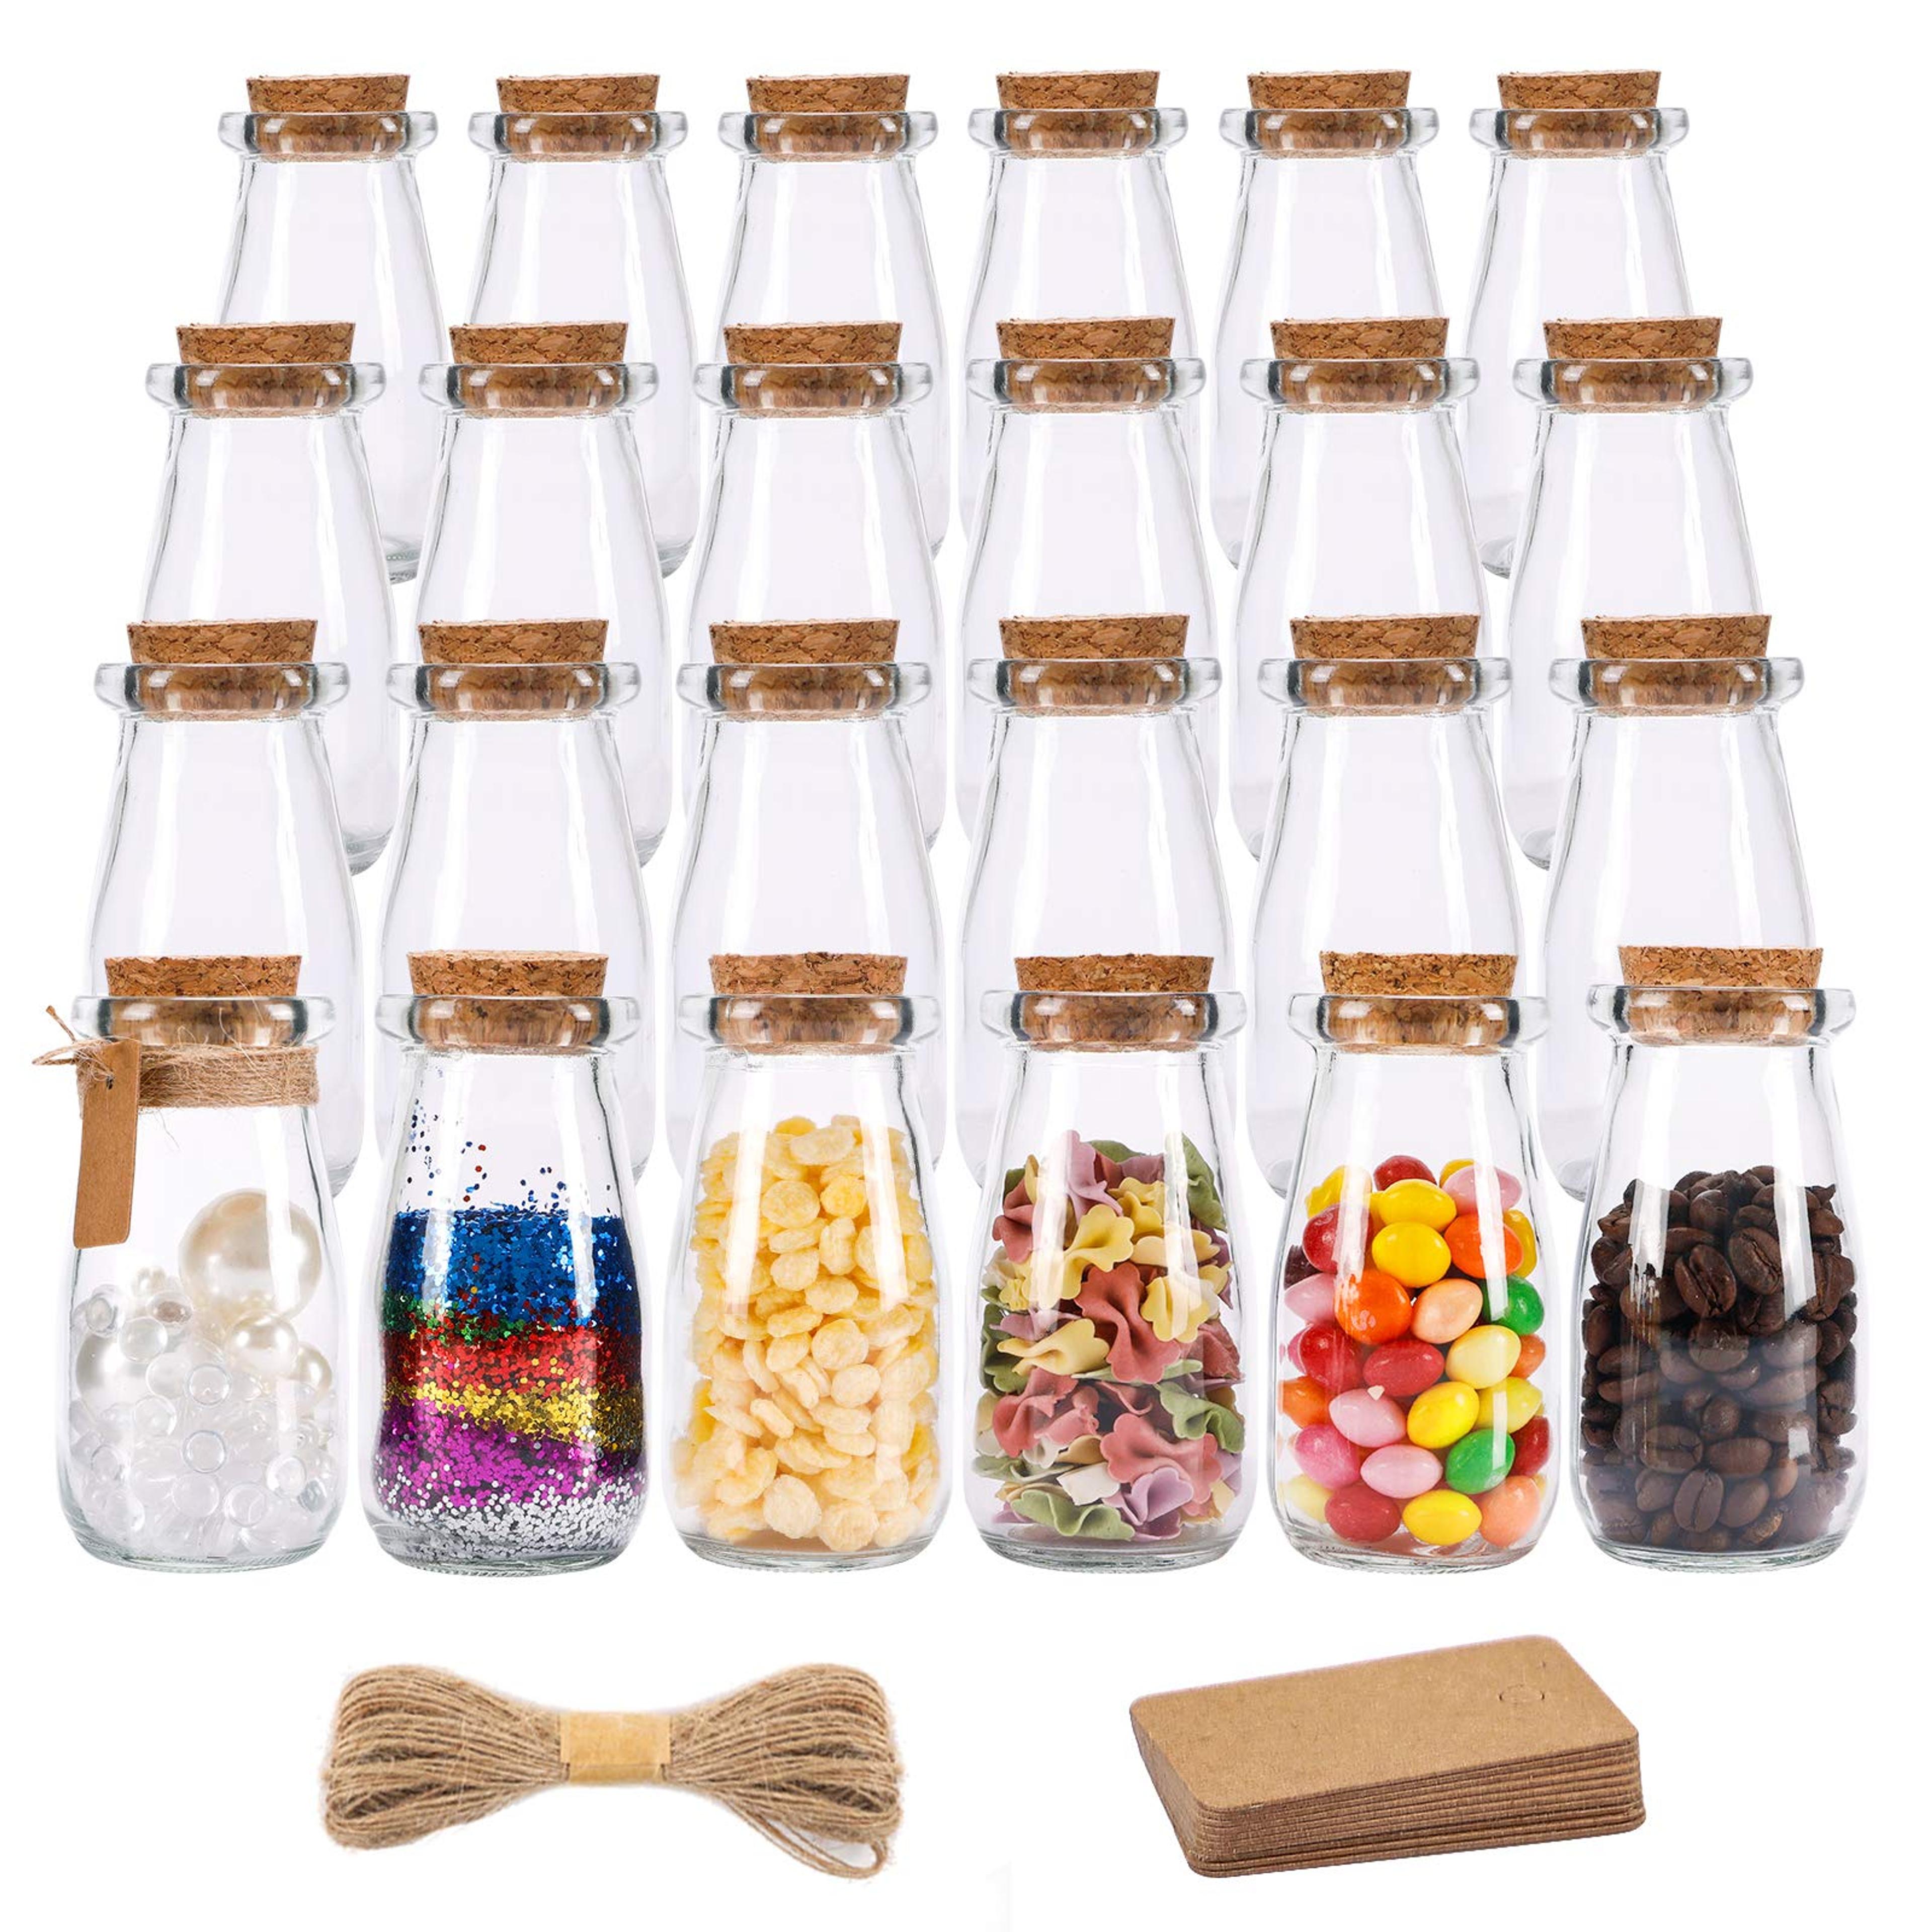 SUPERLELE 24pcs 3.4oz Glass Favor Jars, 100ml Small Glass Bottles with Cork Lids, Mini Milk Potion Bottles, Party Cute Jars Wedding Favors with 30pcs Label Tags and 20m Burlap Ribbon